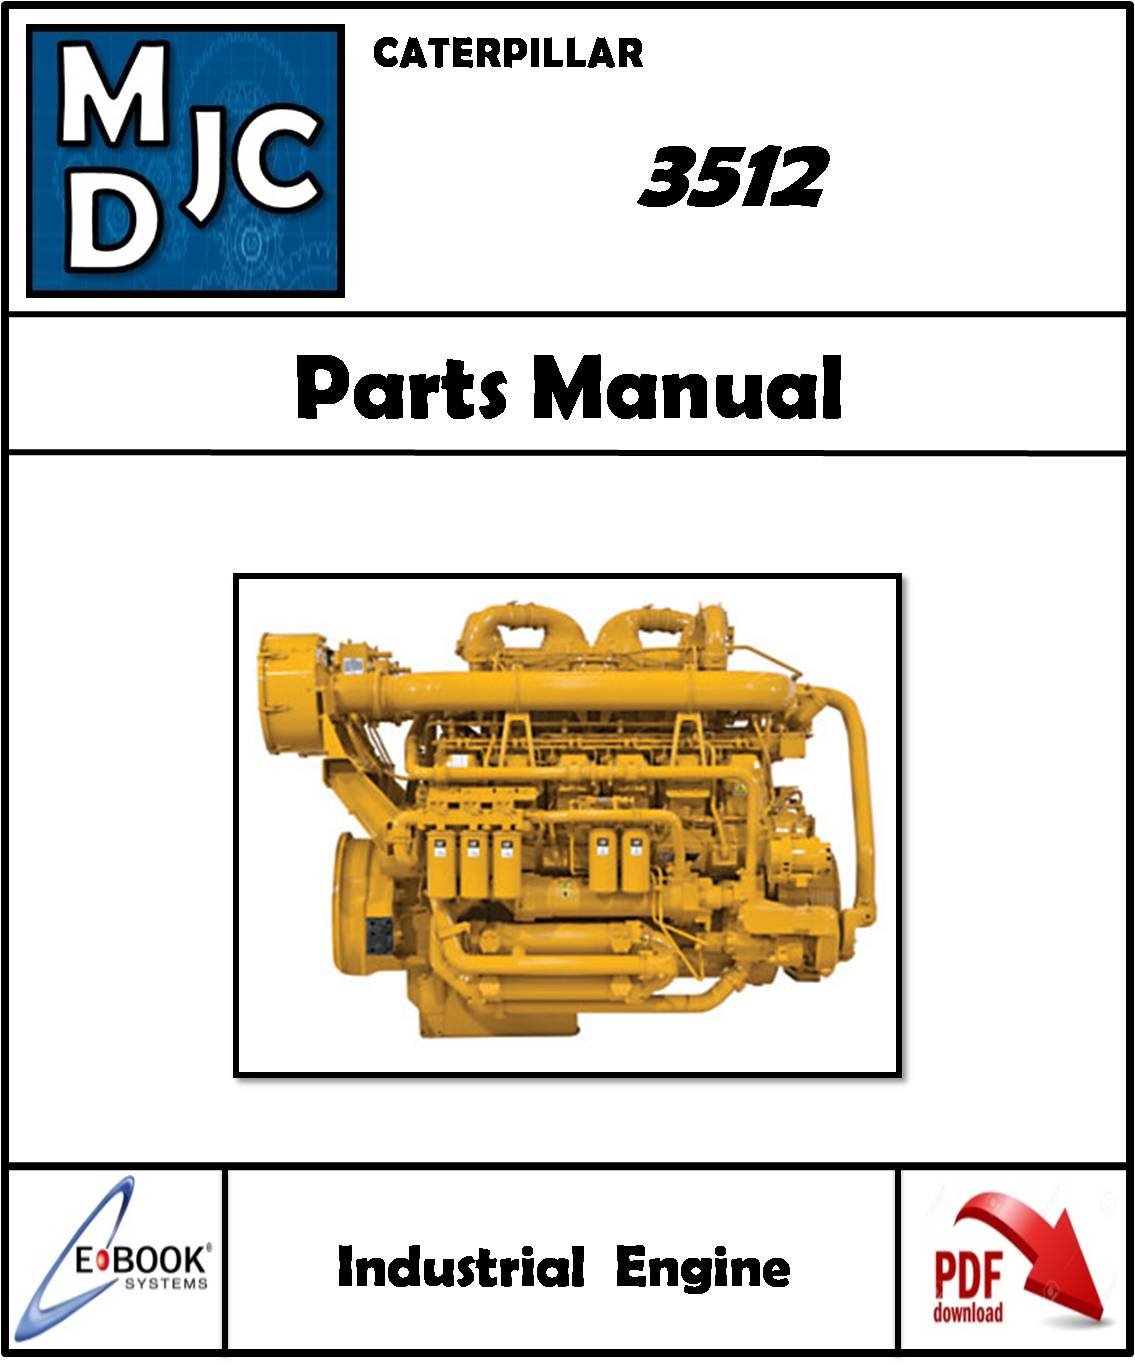 Catalogo de Partes Motor Caterpillar 3512 Industrial